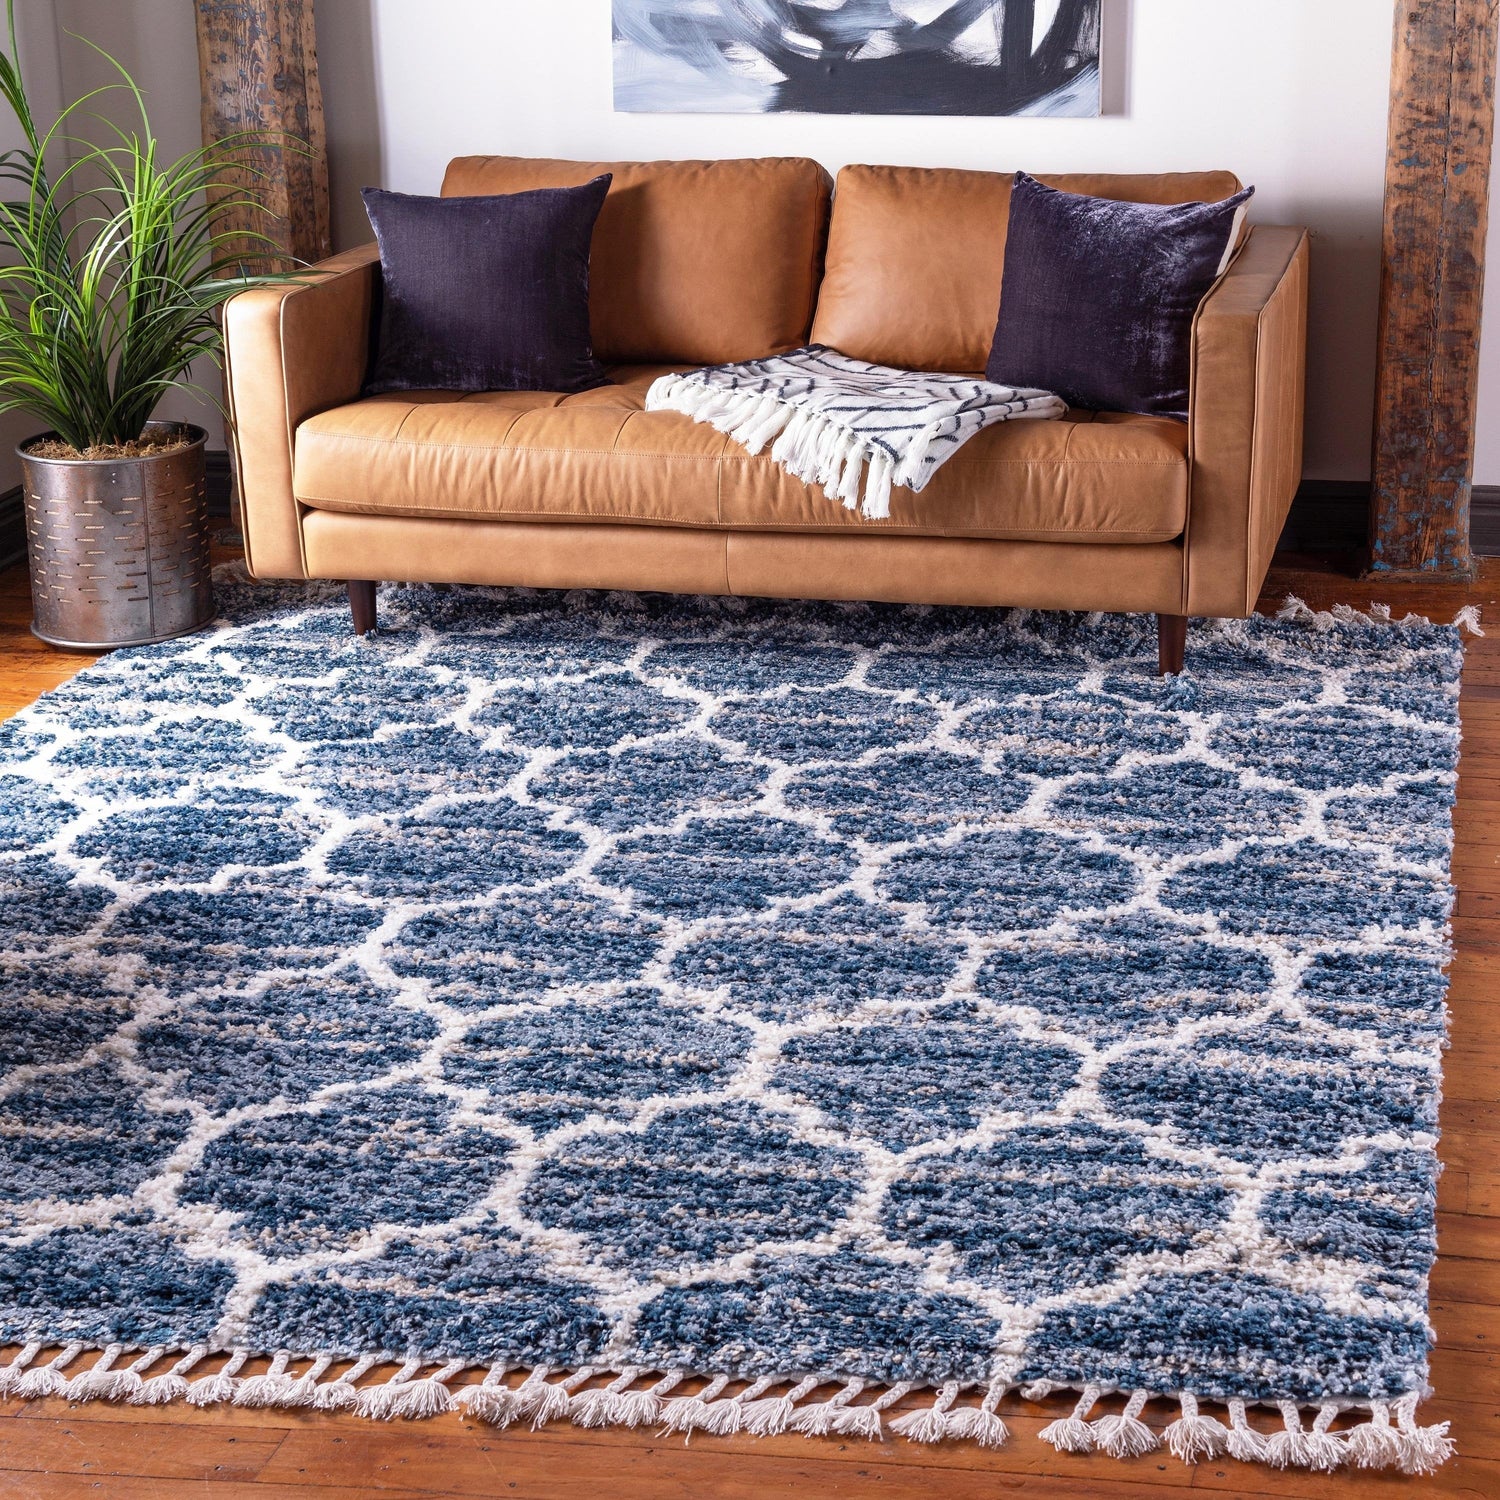 Broderick - Modern Pattern Shaggy Area Rug - Nordic Side - abstract-rug, area-rug, feed-cl0-over-80-dollars, geometric-rug, hallway-runner, large-rug, modern, modern-rug, round-rug, shaggy-ru